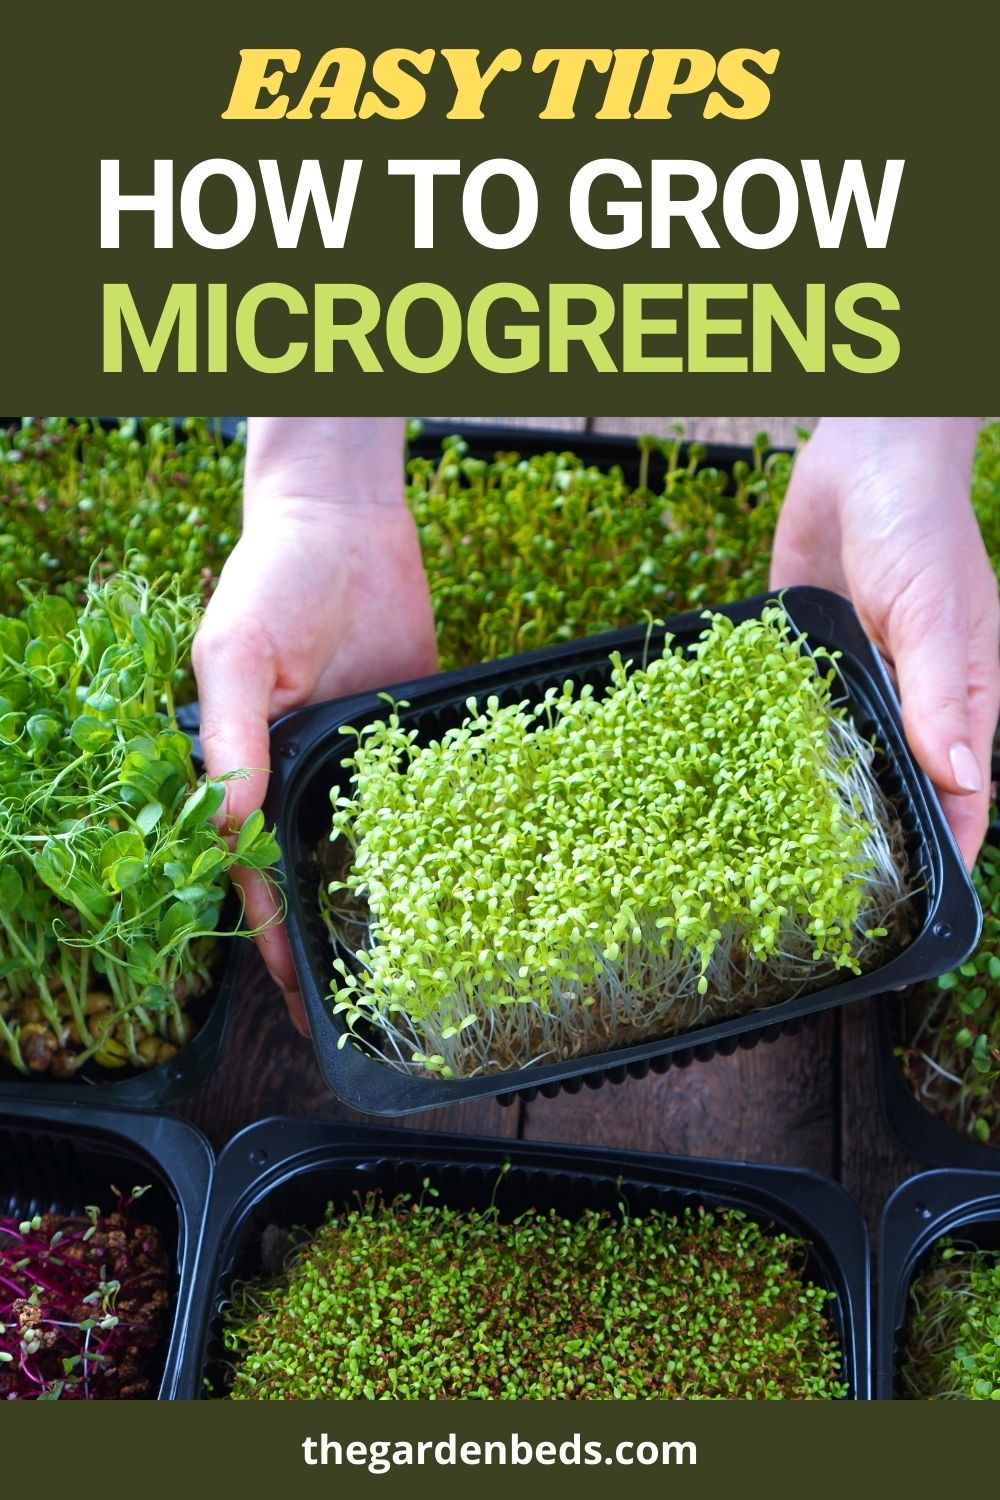 Easy Tip How to Grow Microgreens